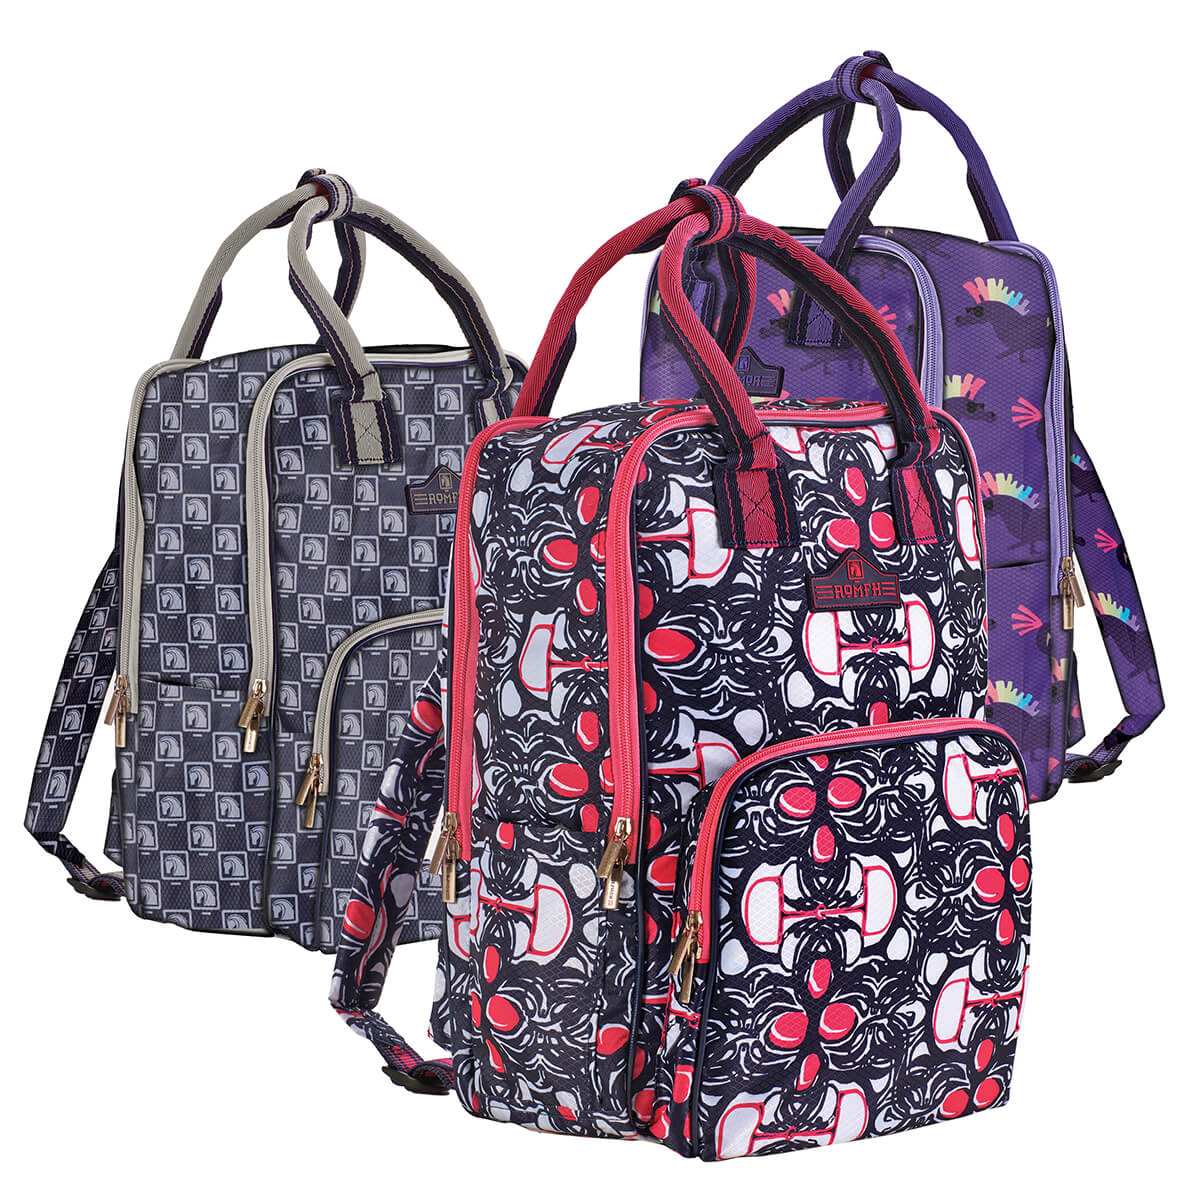 Romfh Barn-Friendly Backpack Handbag